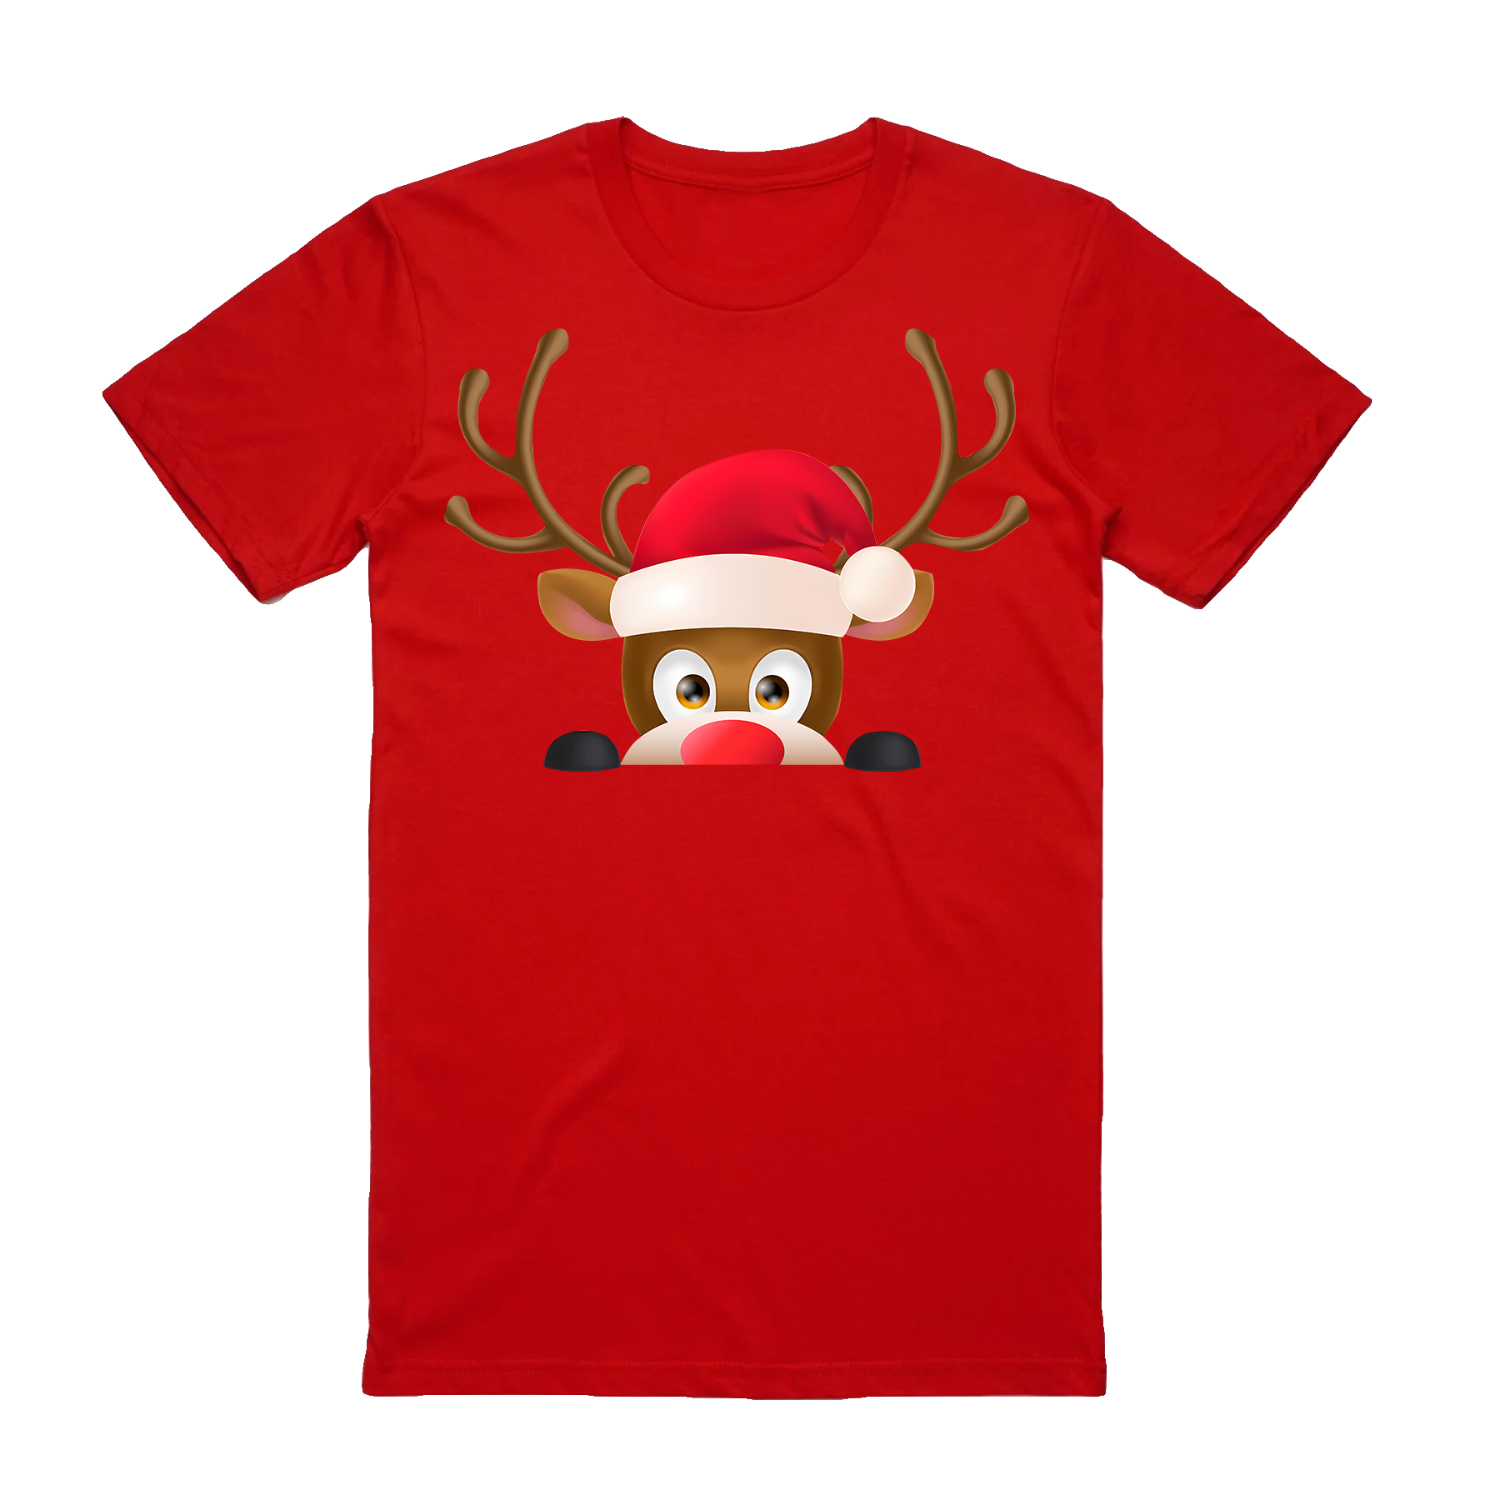 100% Cotton Christmas T-shirt Adult Unisex Tee Tops - Reindeer Head